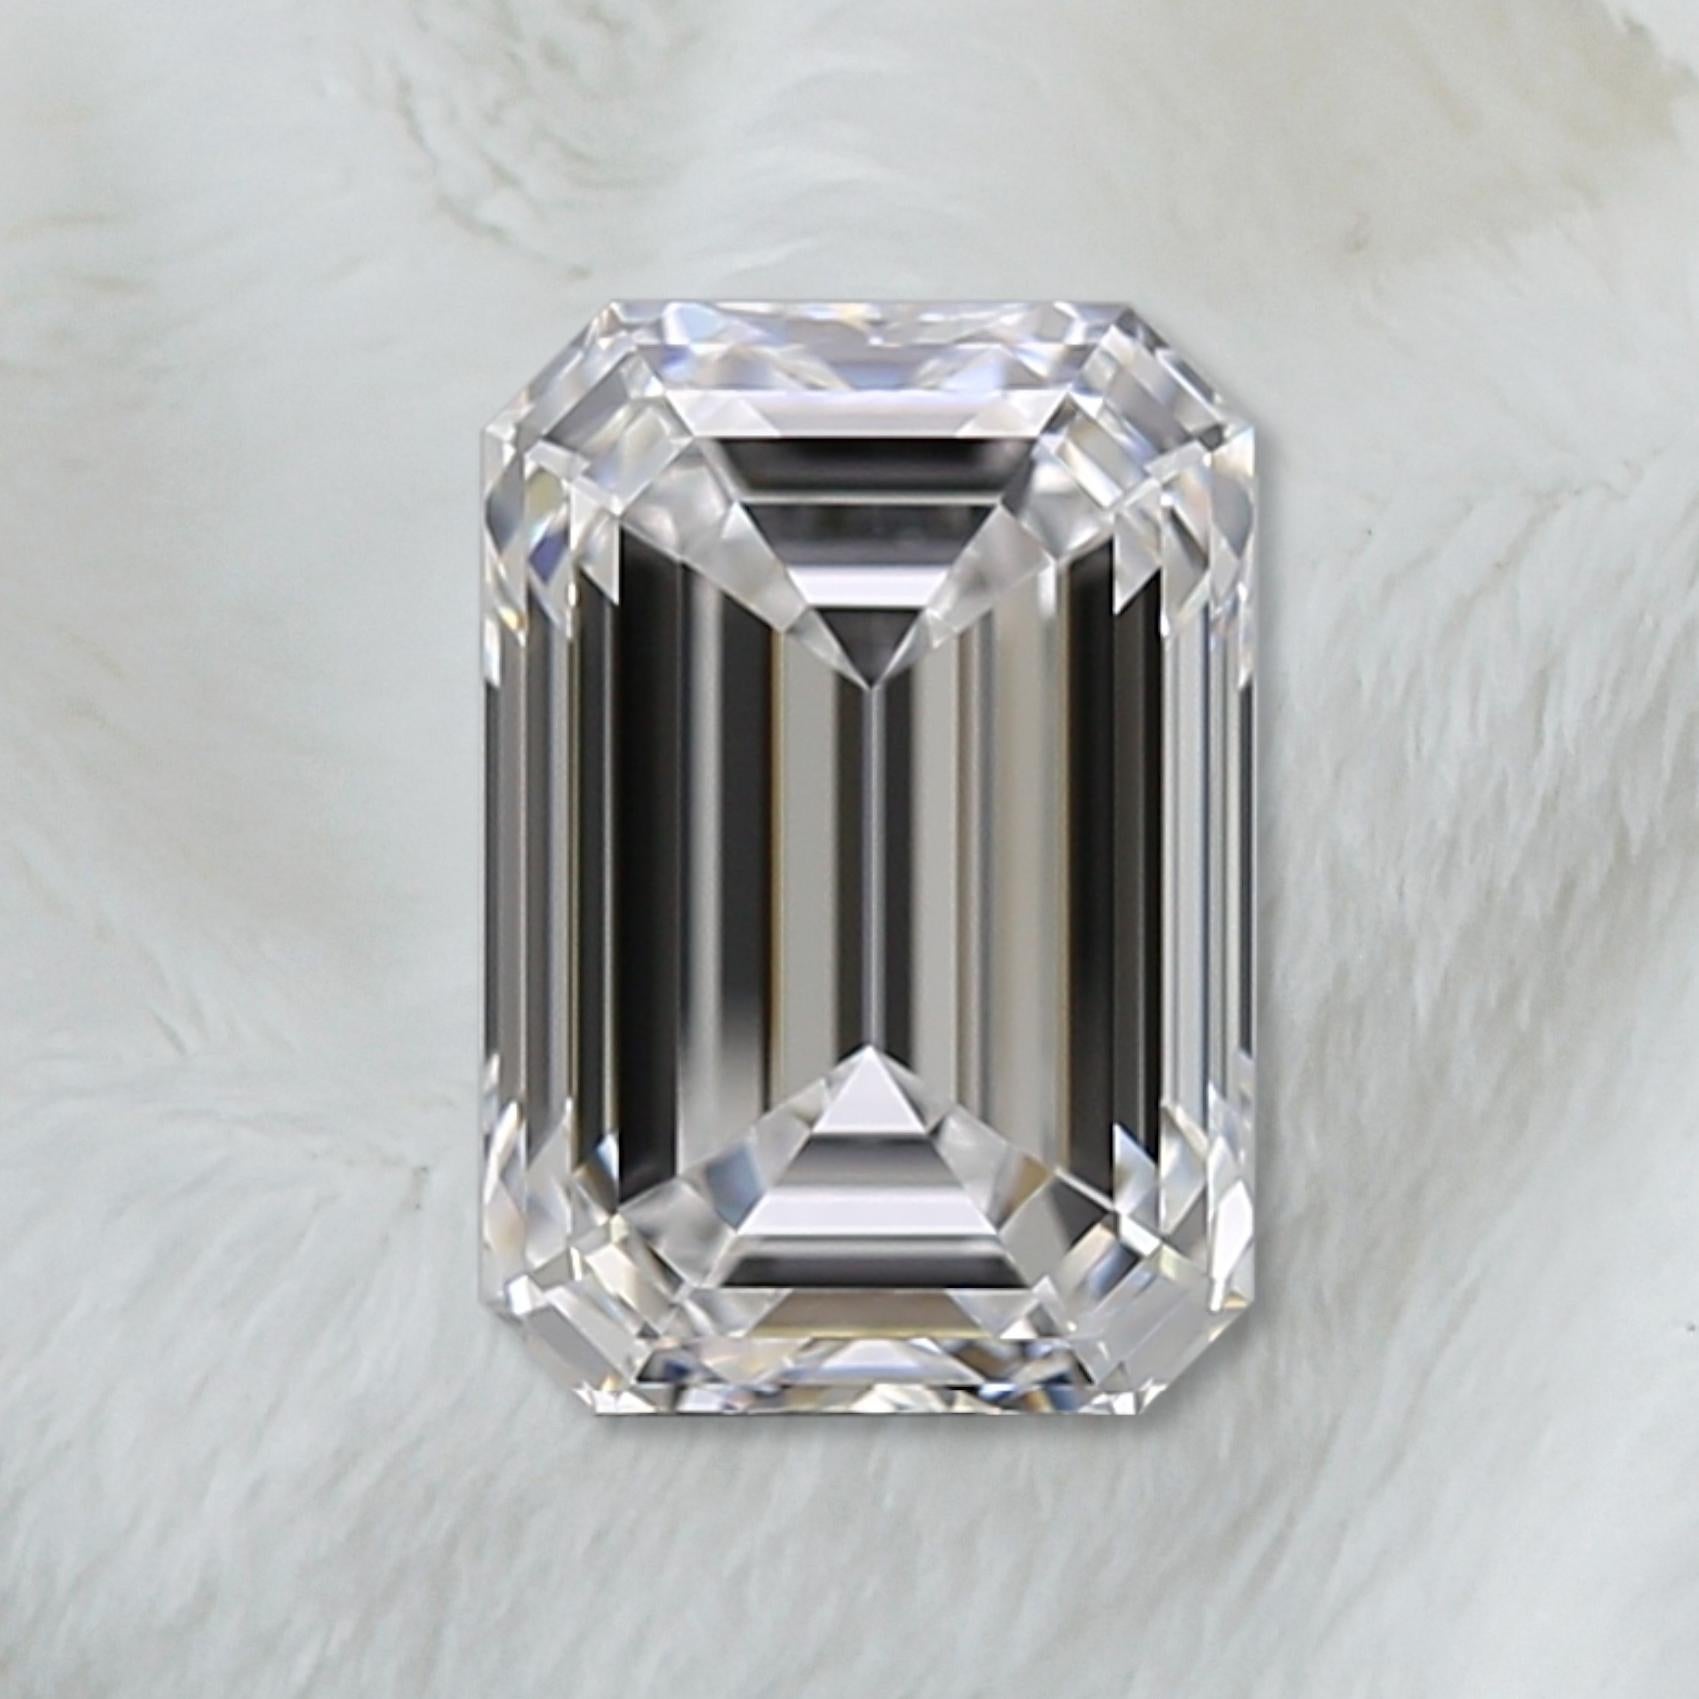 3 carat emerald cut diamond ring on finger